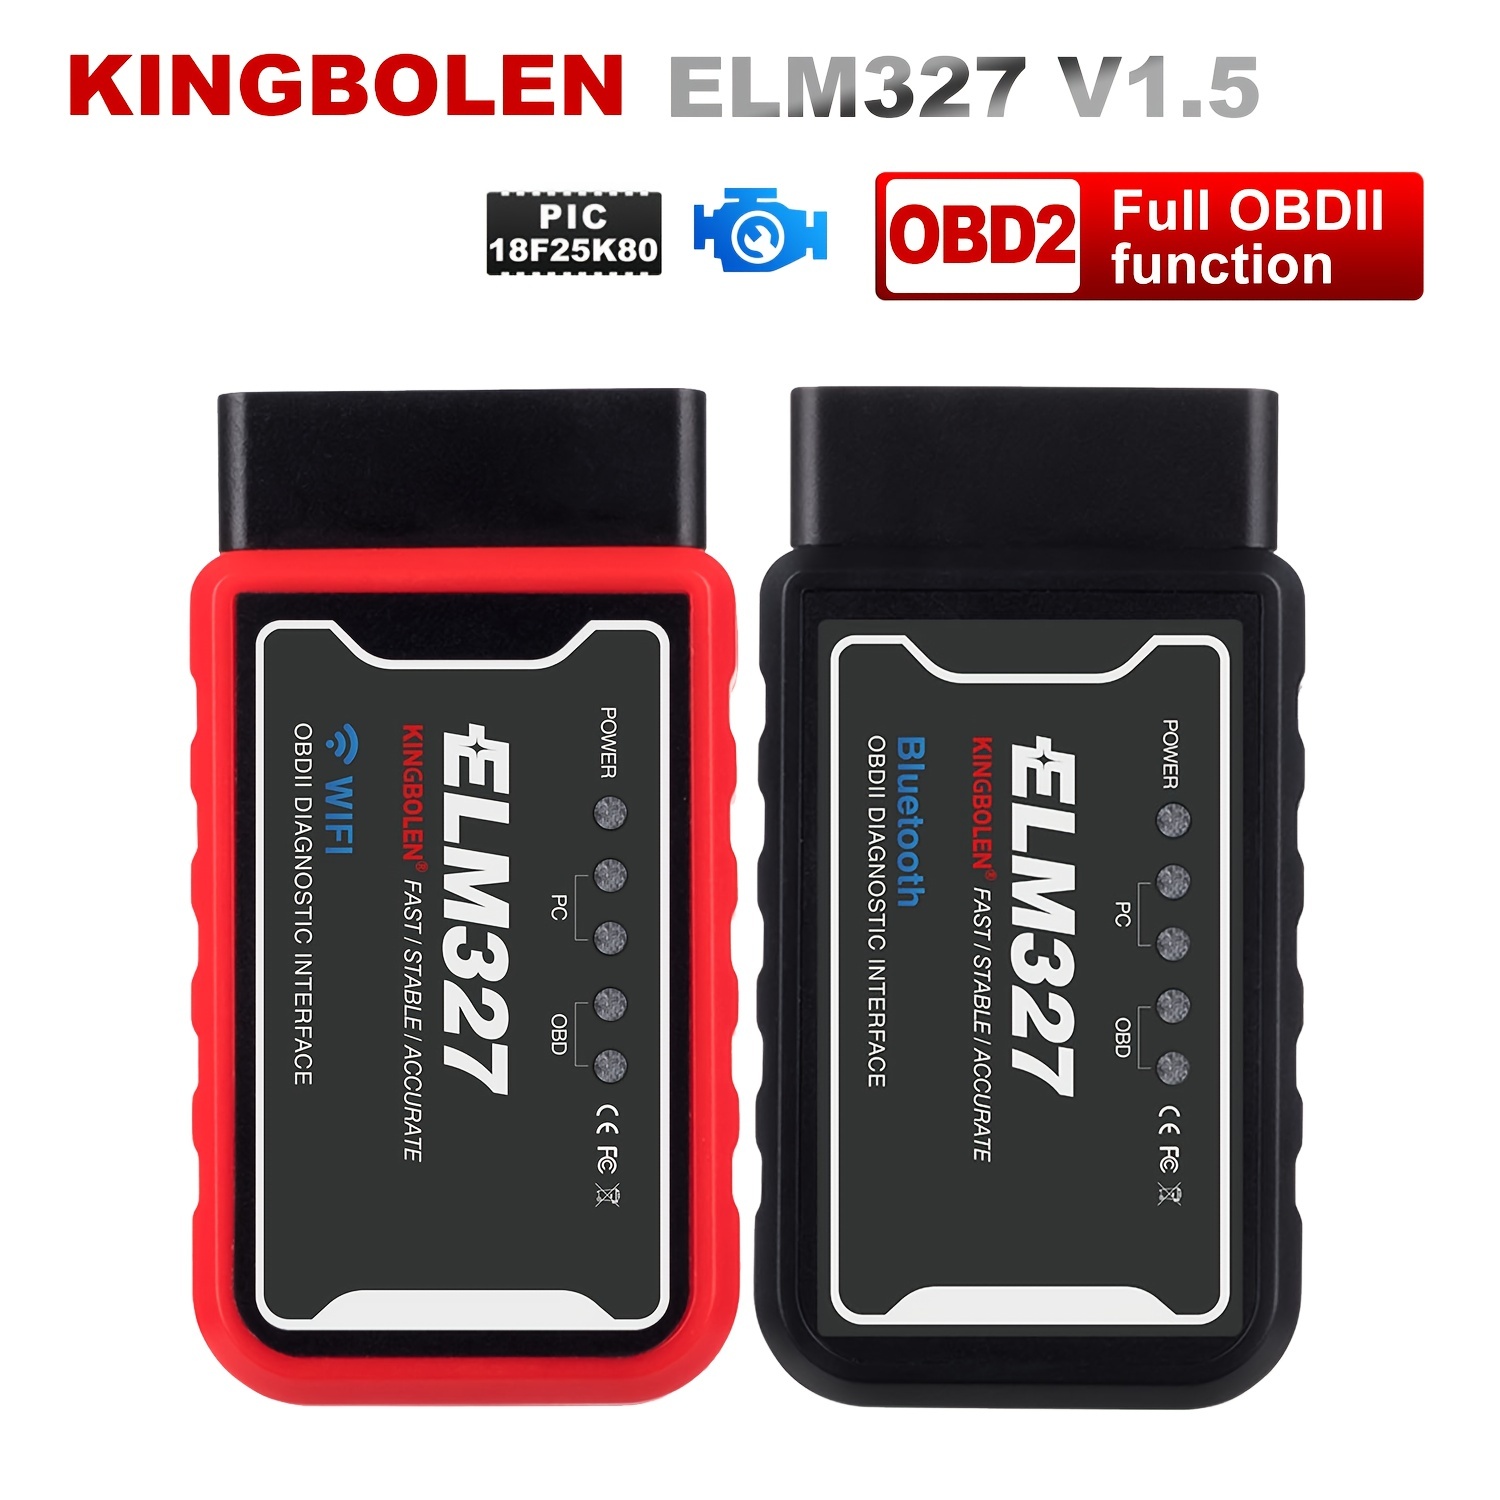 ELM327 WiFi Bluetooth OBD2 OBDII Car Diagnostic Scanner Code Reader Tool